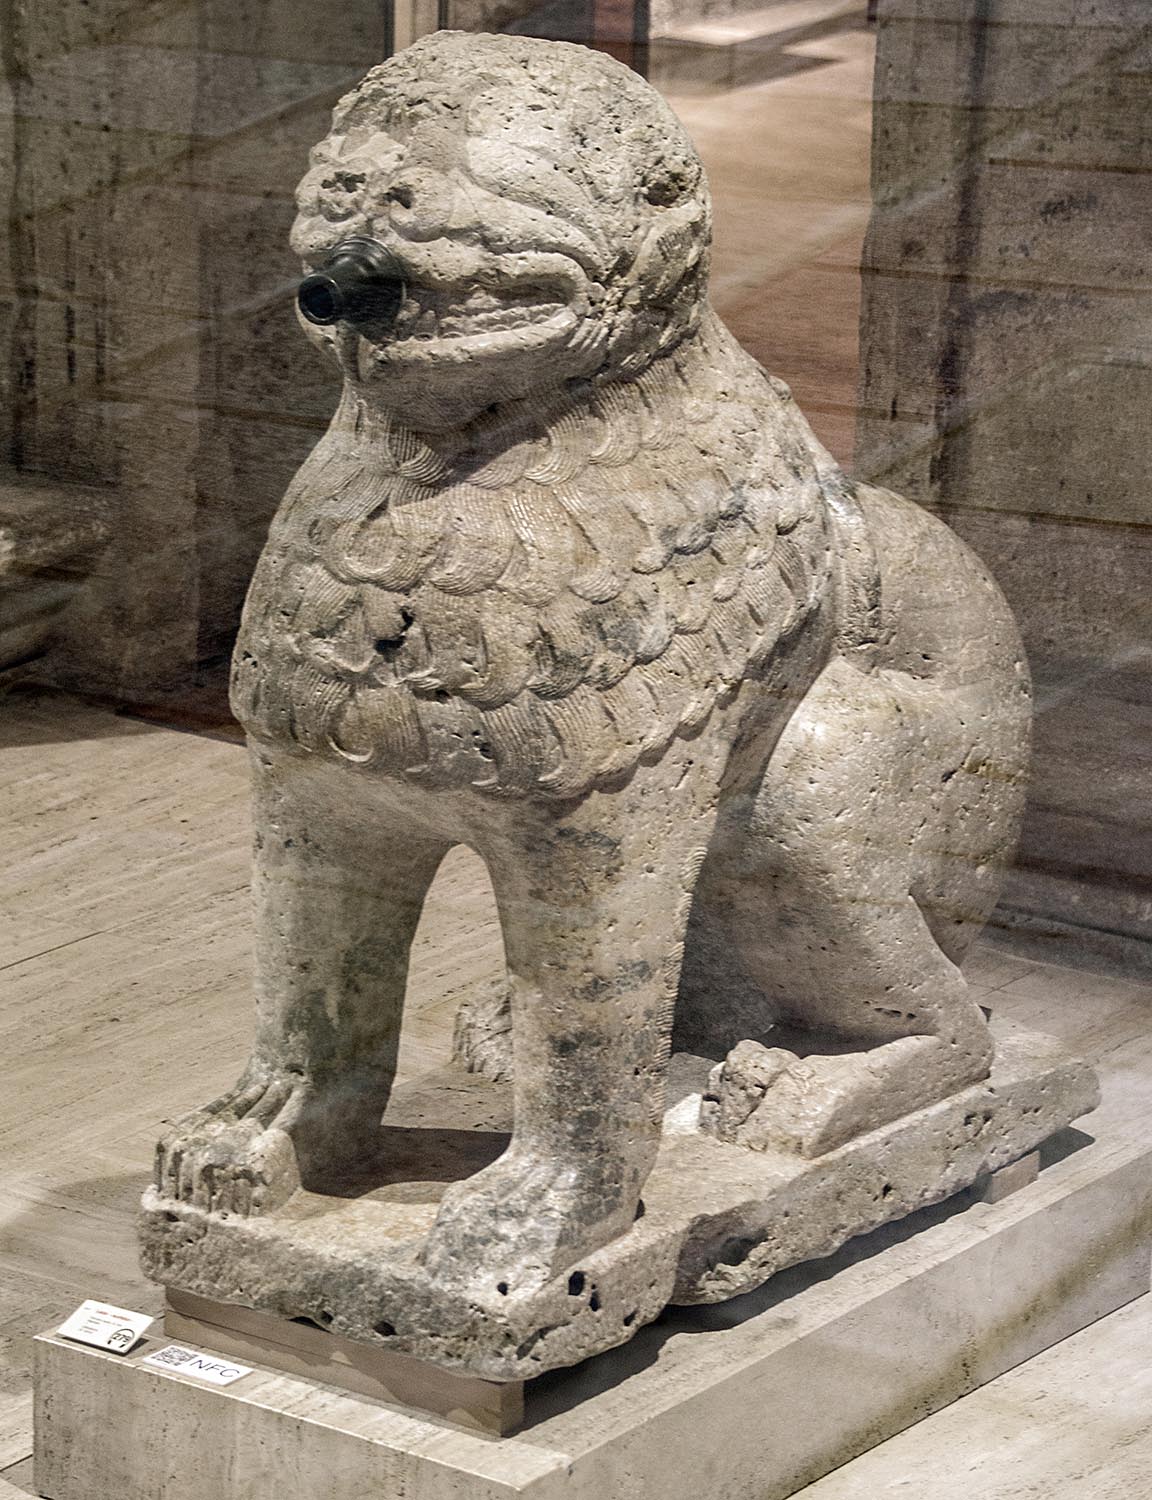 Lion figure on display at Alhambra Museum